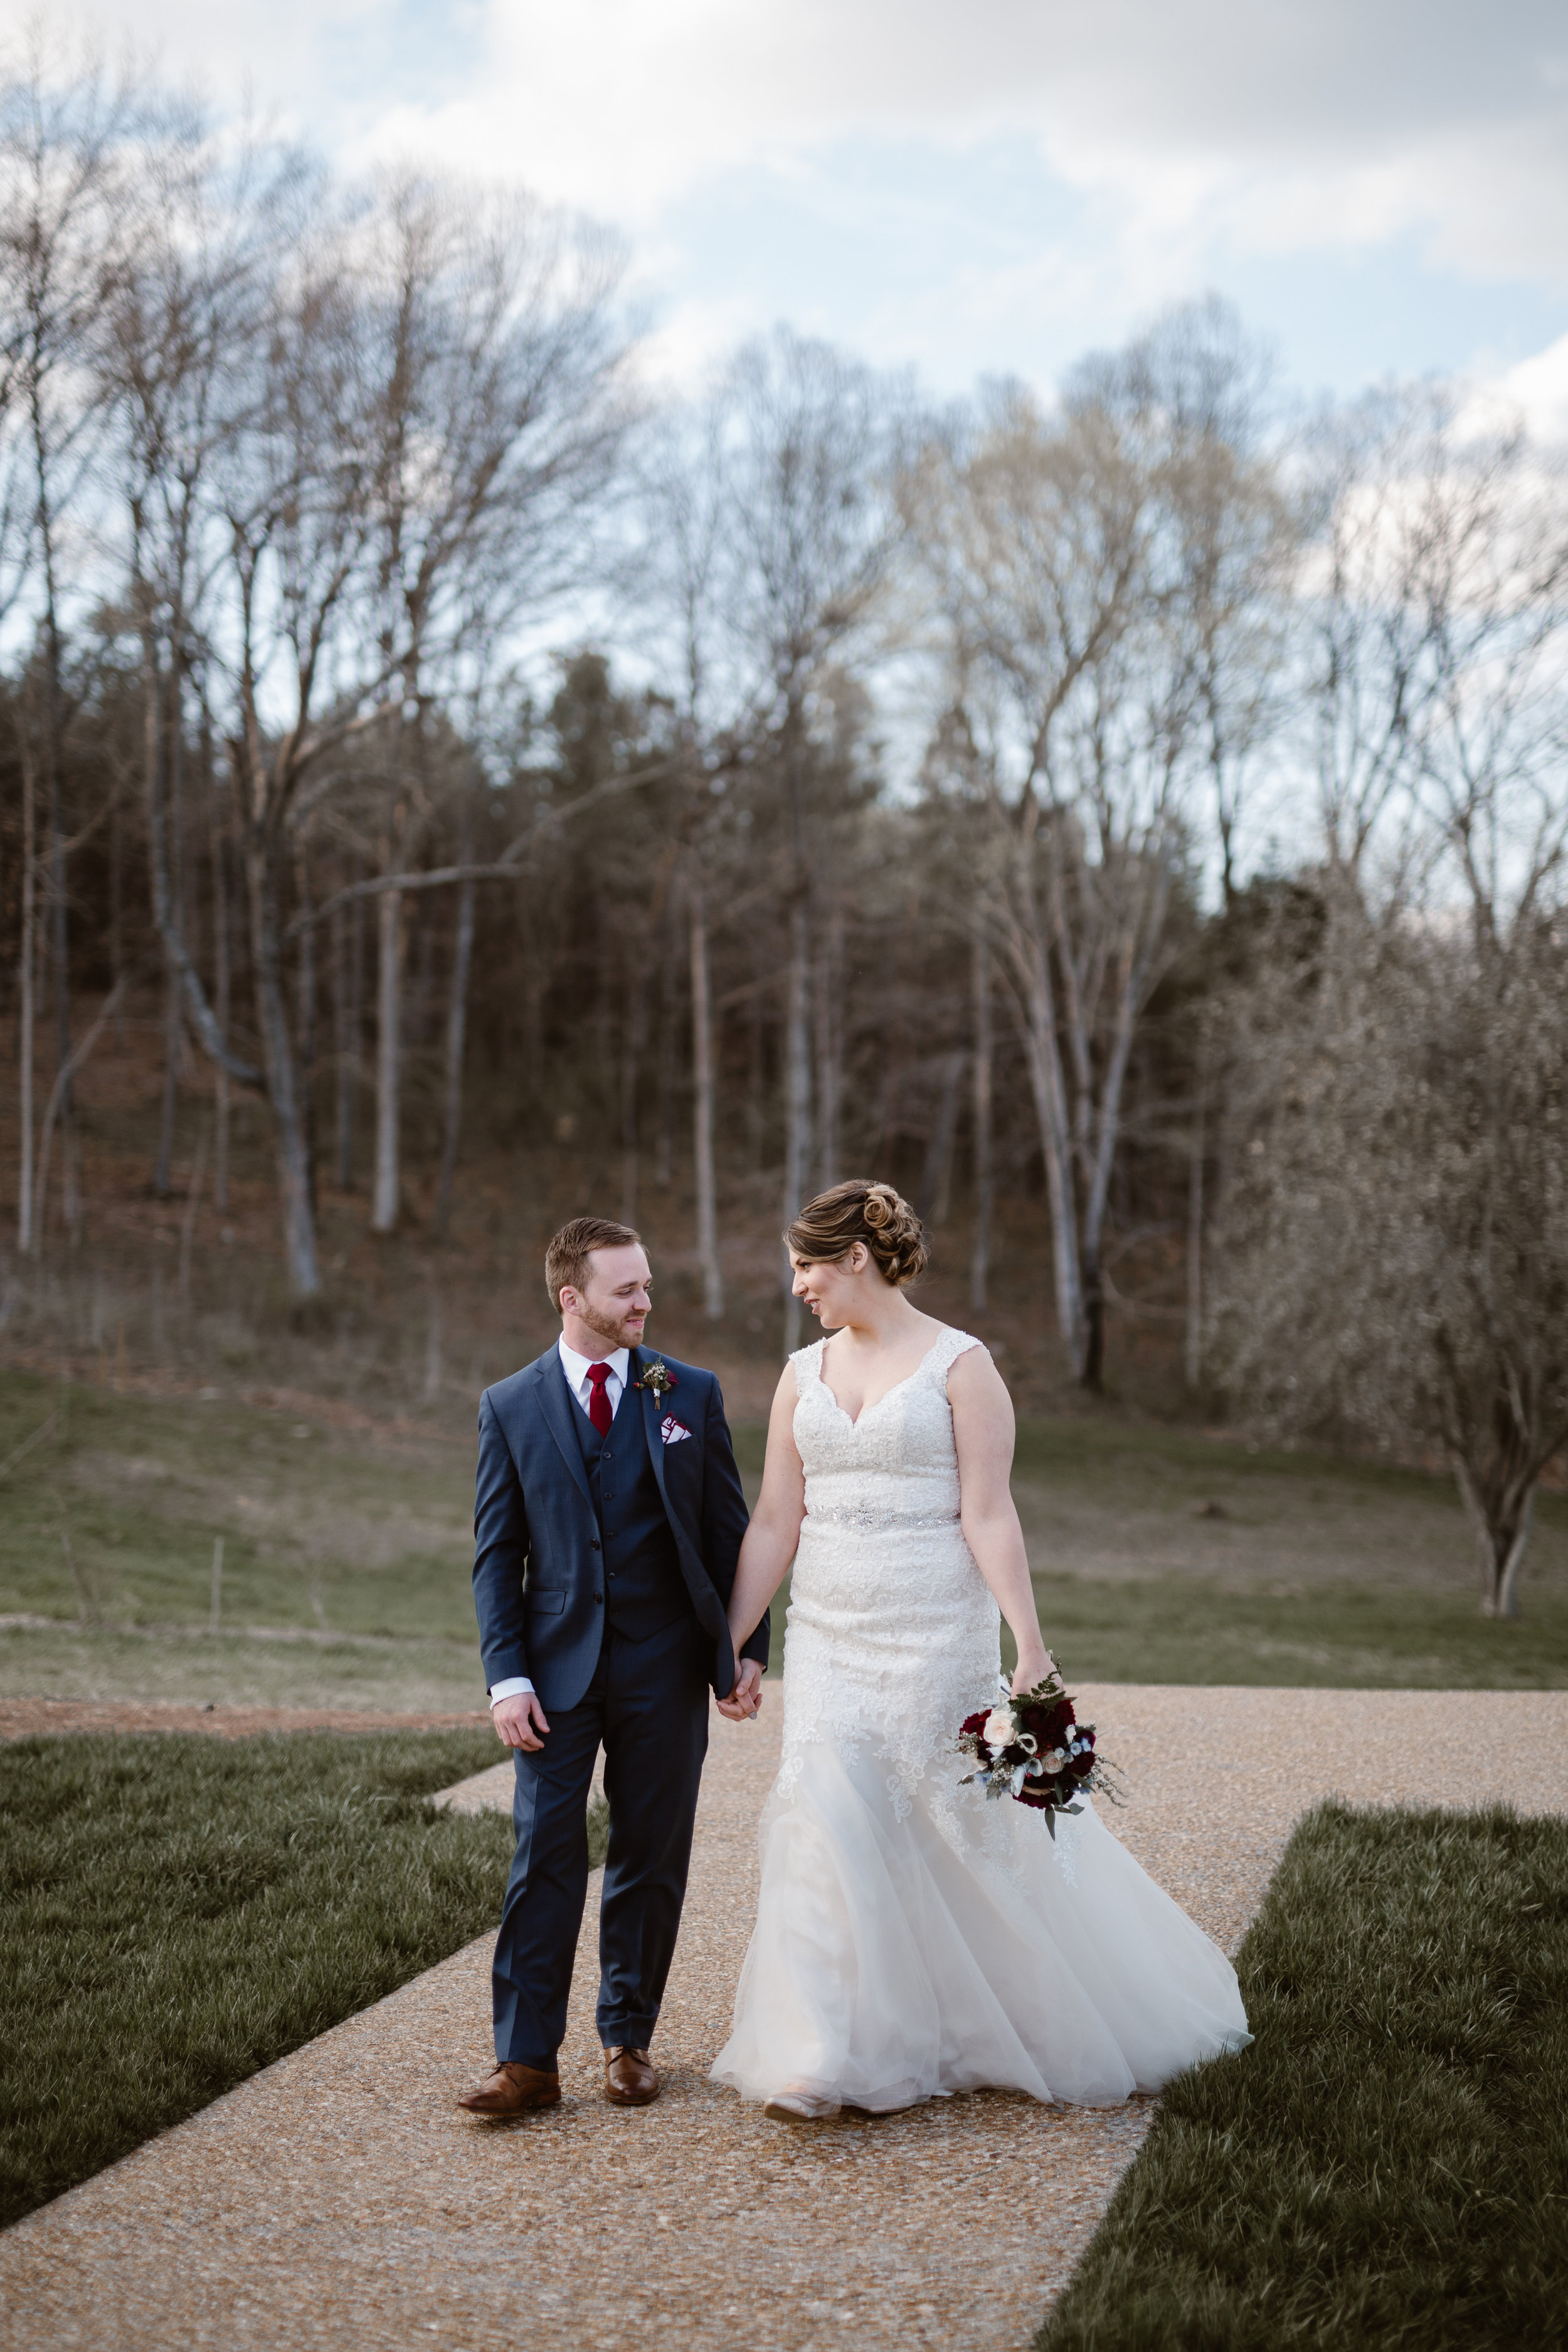 A Burgundy + Bronze Ramble Creek Fall Wedding - Erin Morrison Photography